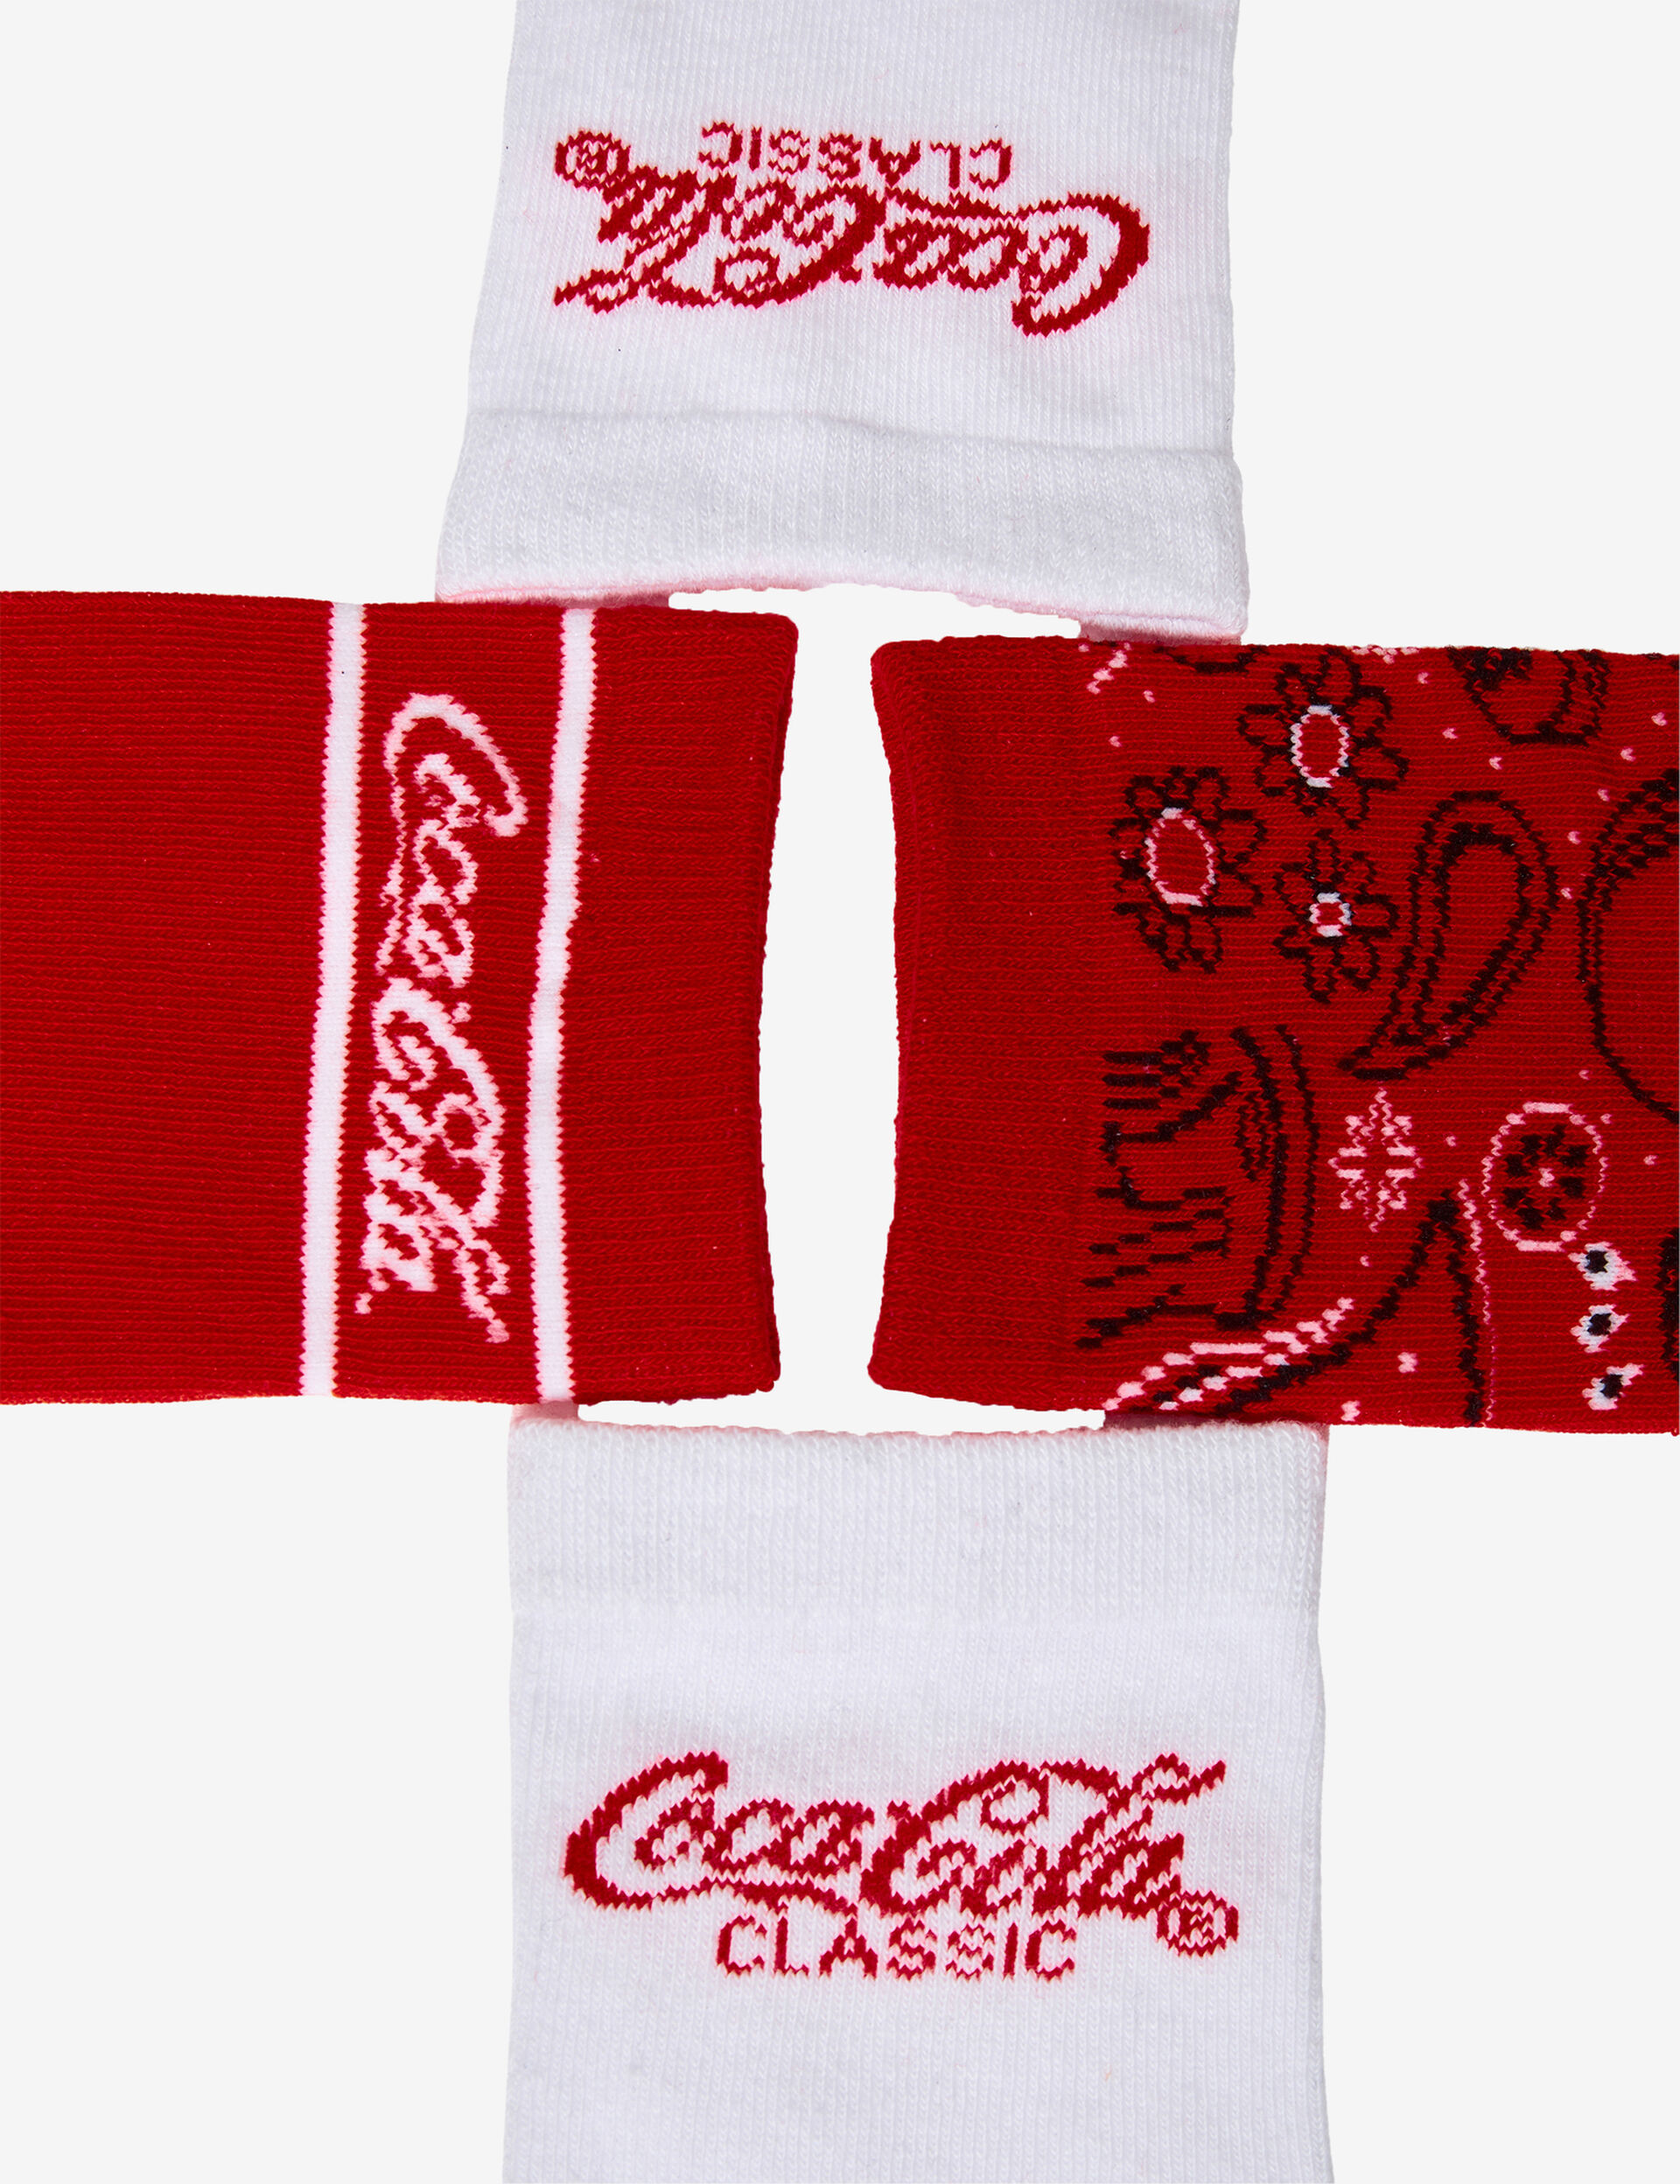 Coca-Cola socks